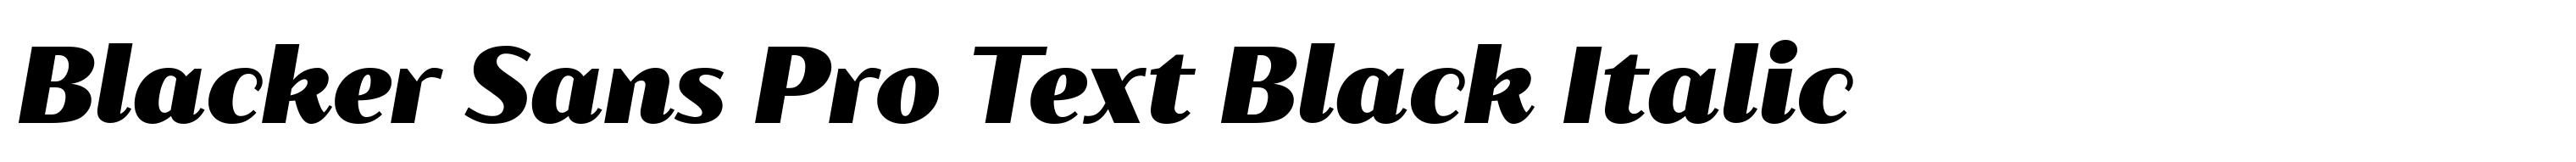 Blacker Sans Pro Text Black Italic